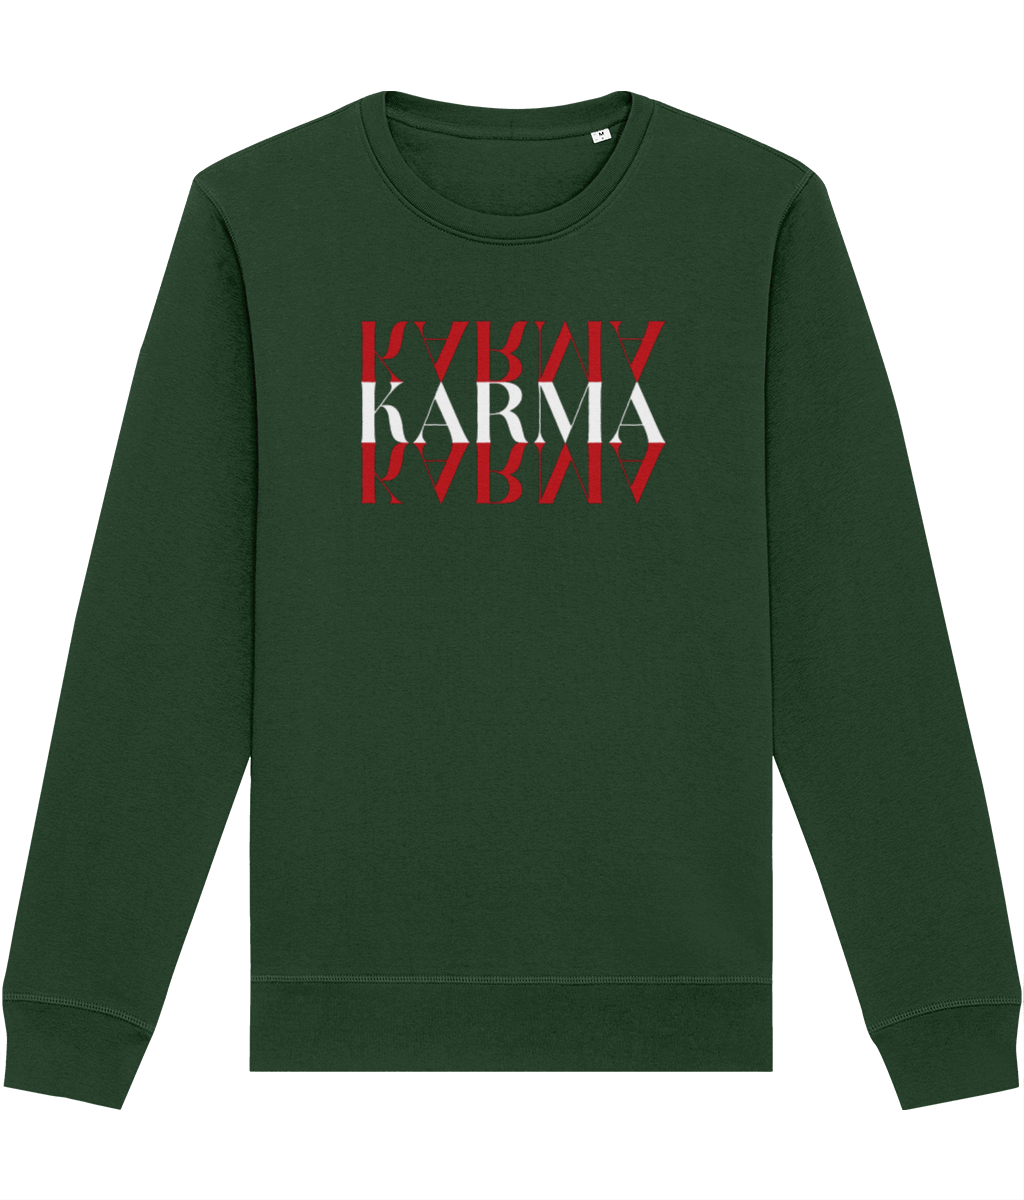 Contemporary 'Karma Karma Karma' Organic Cotton Sweatshirt - Karma